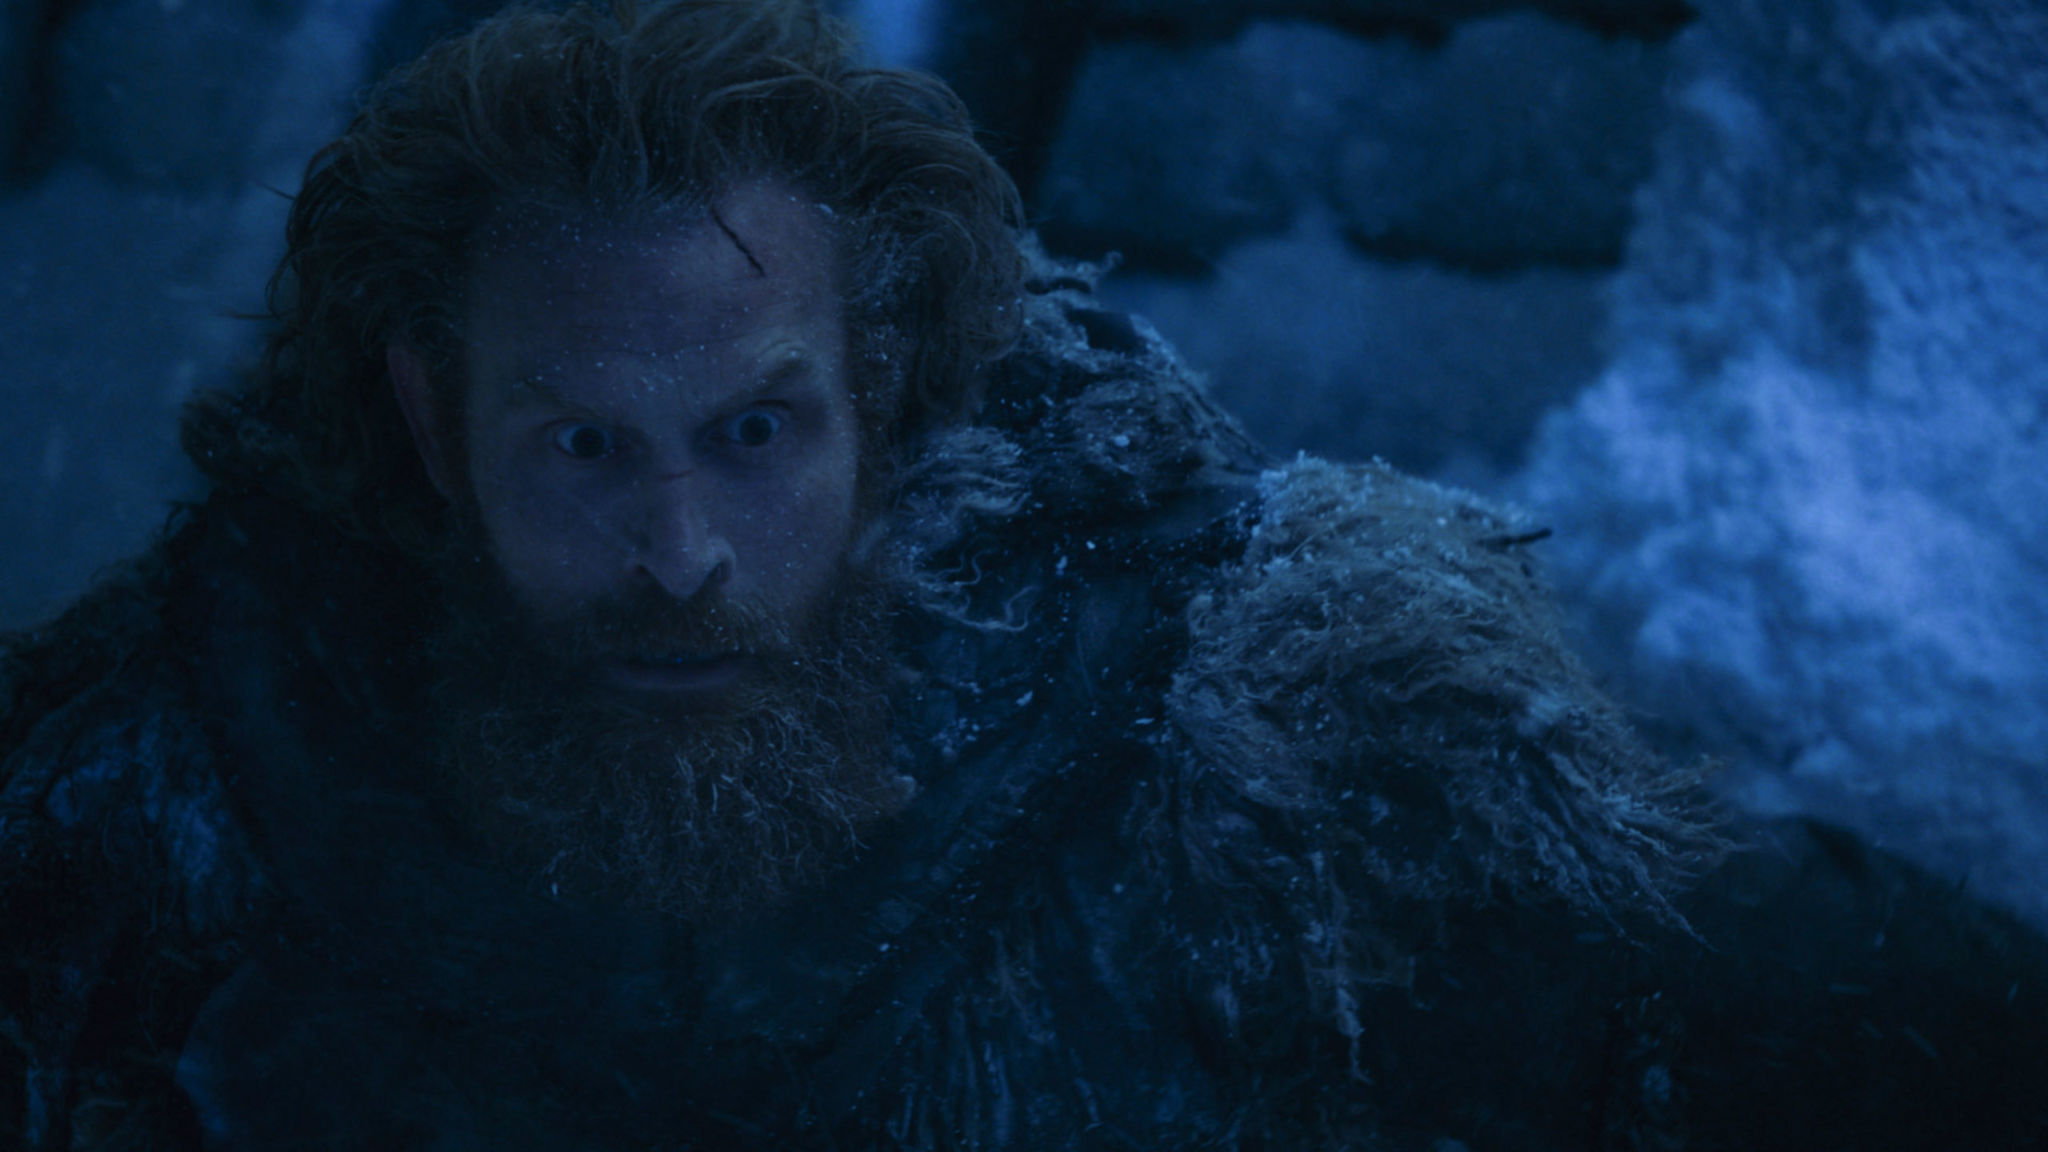 Kristofer Hivju as Tormund Giantsbane in Game of Thrones